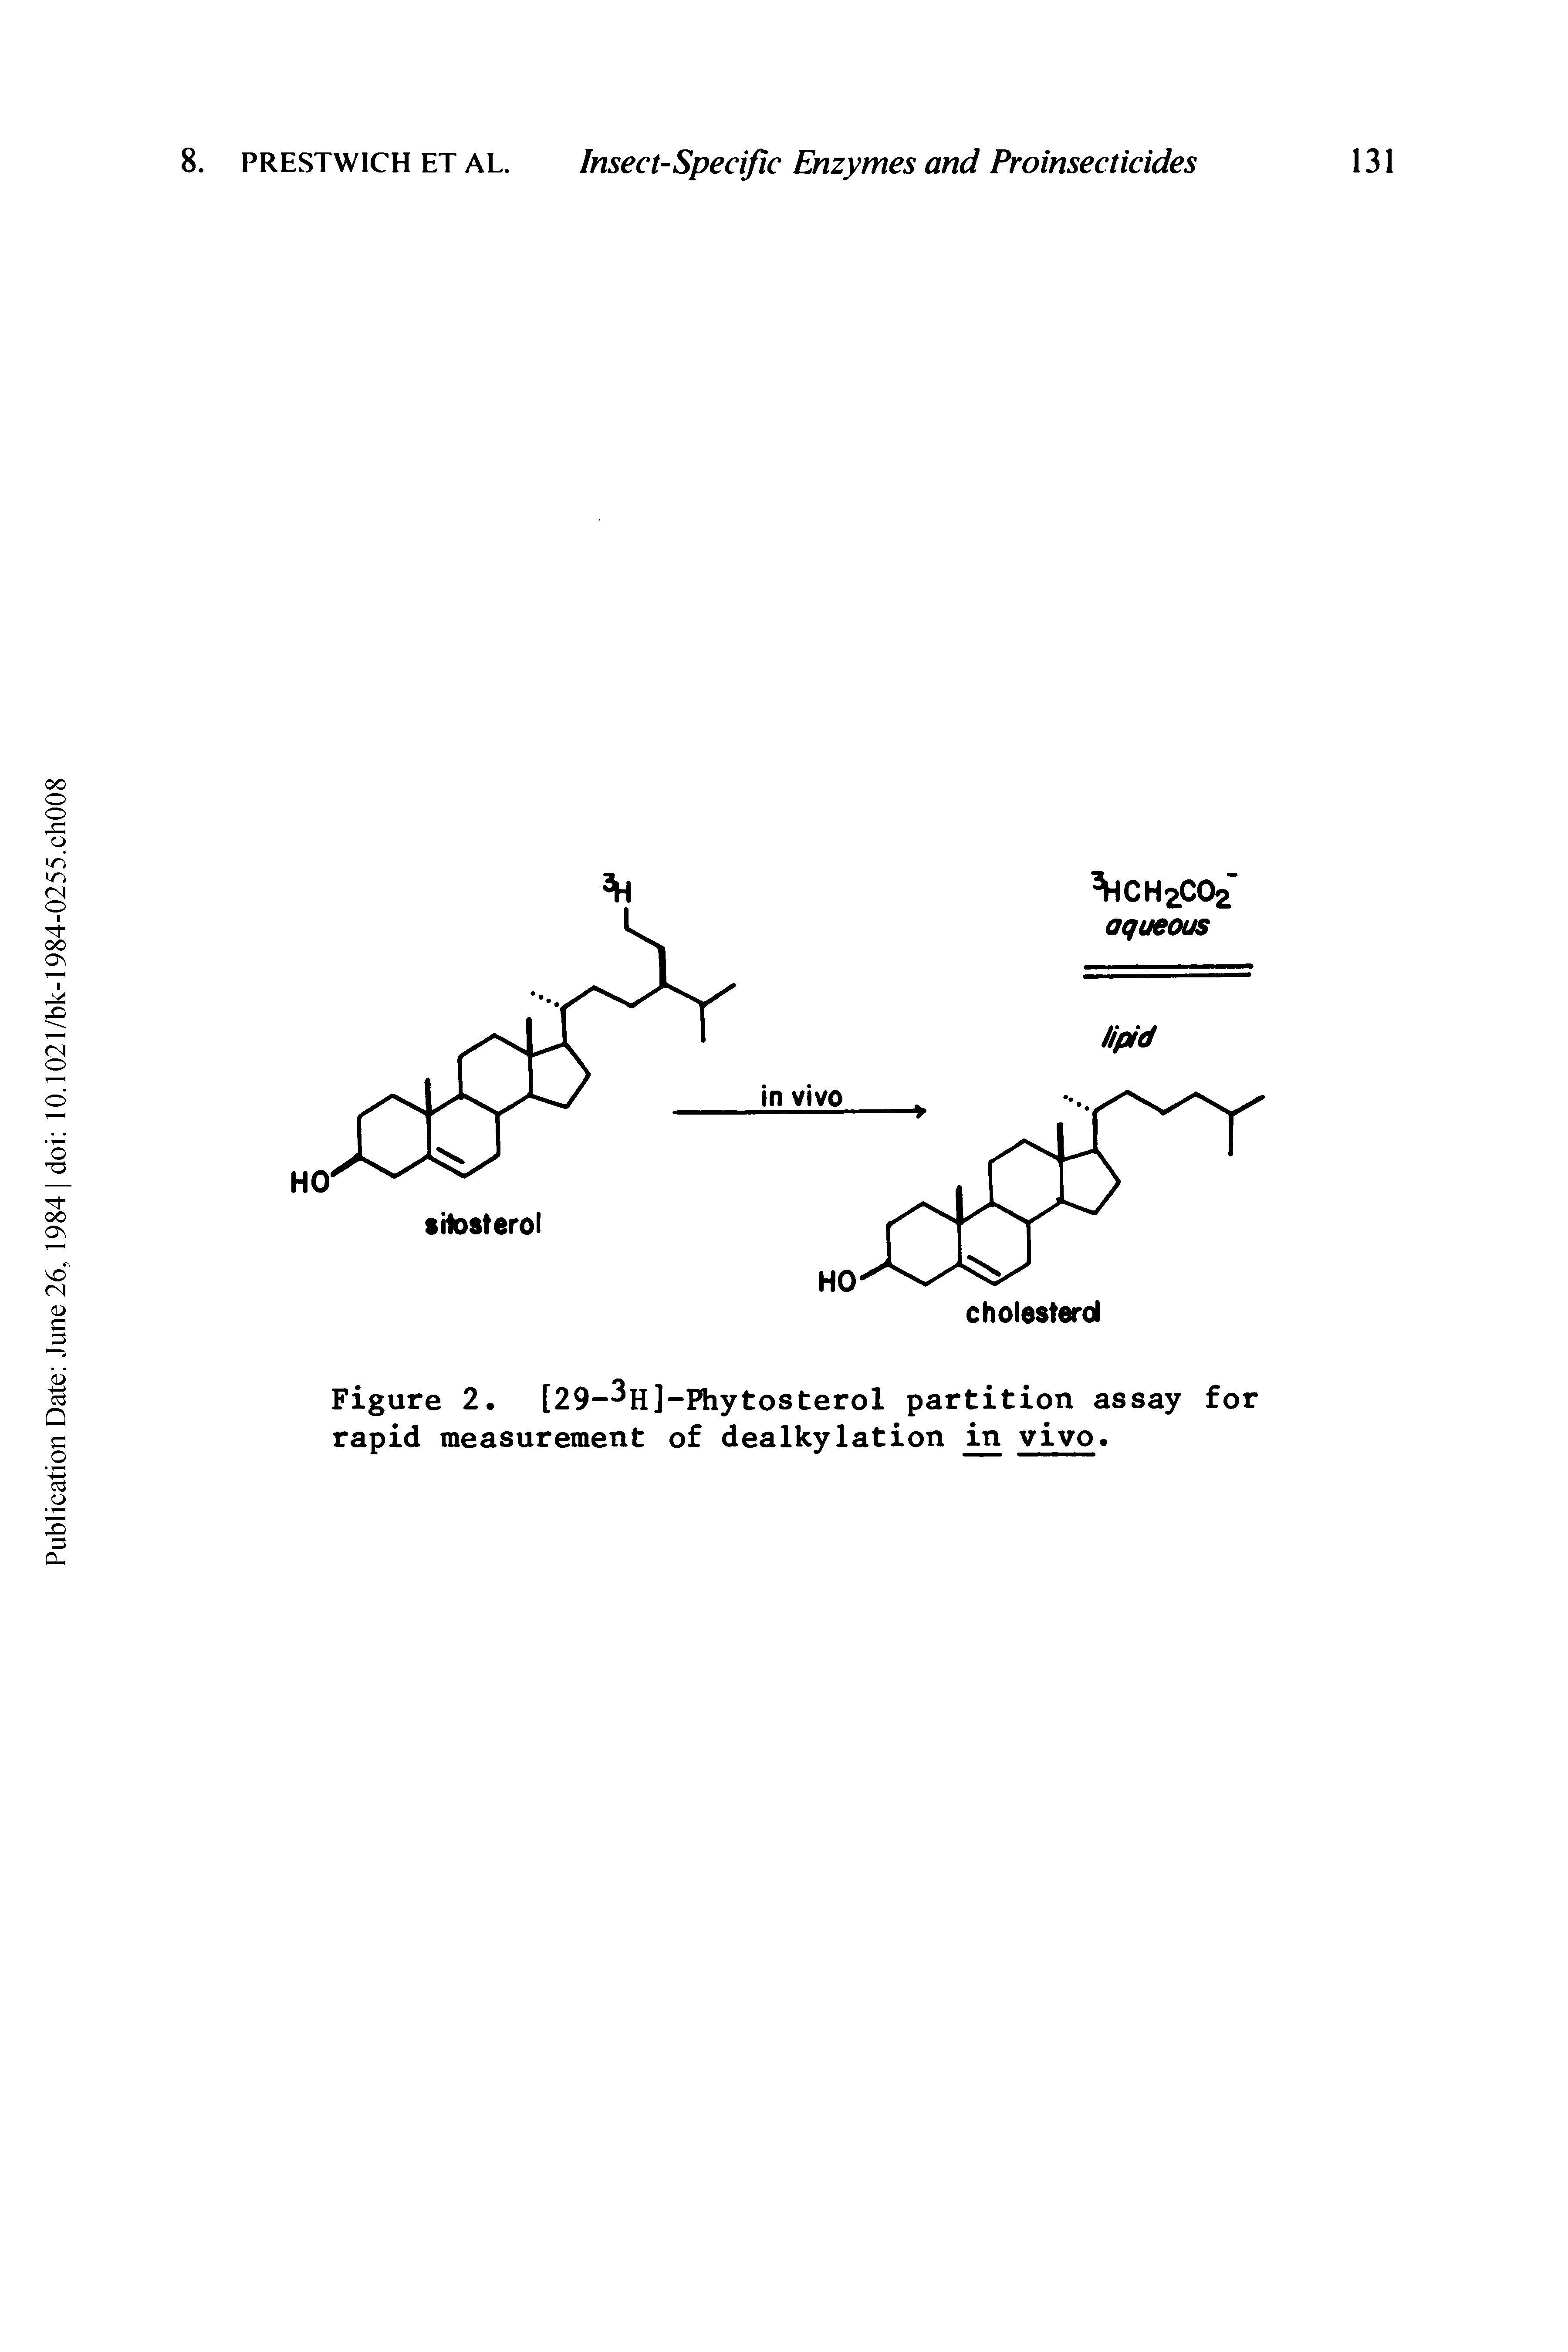 Figure 2. [29- H]-Phytosterol partition assay for rapid measurement of dealkylation m vivo.